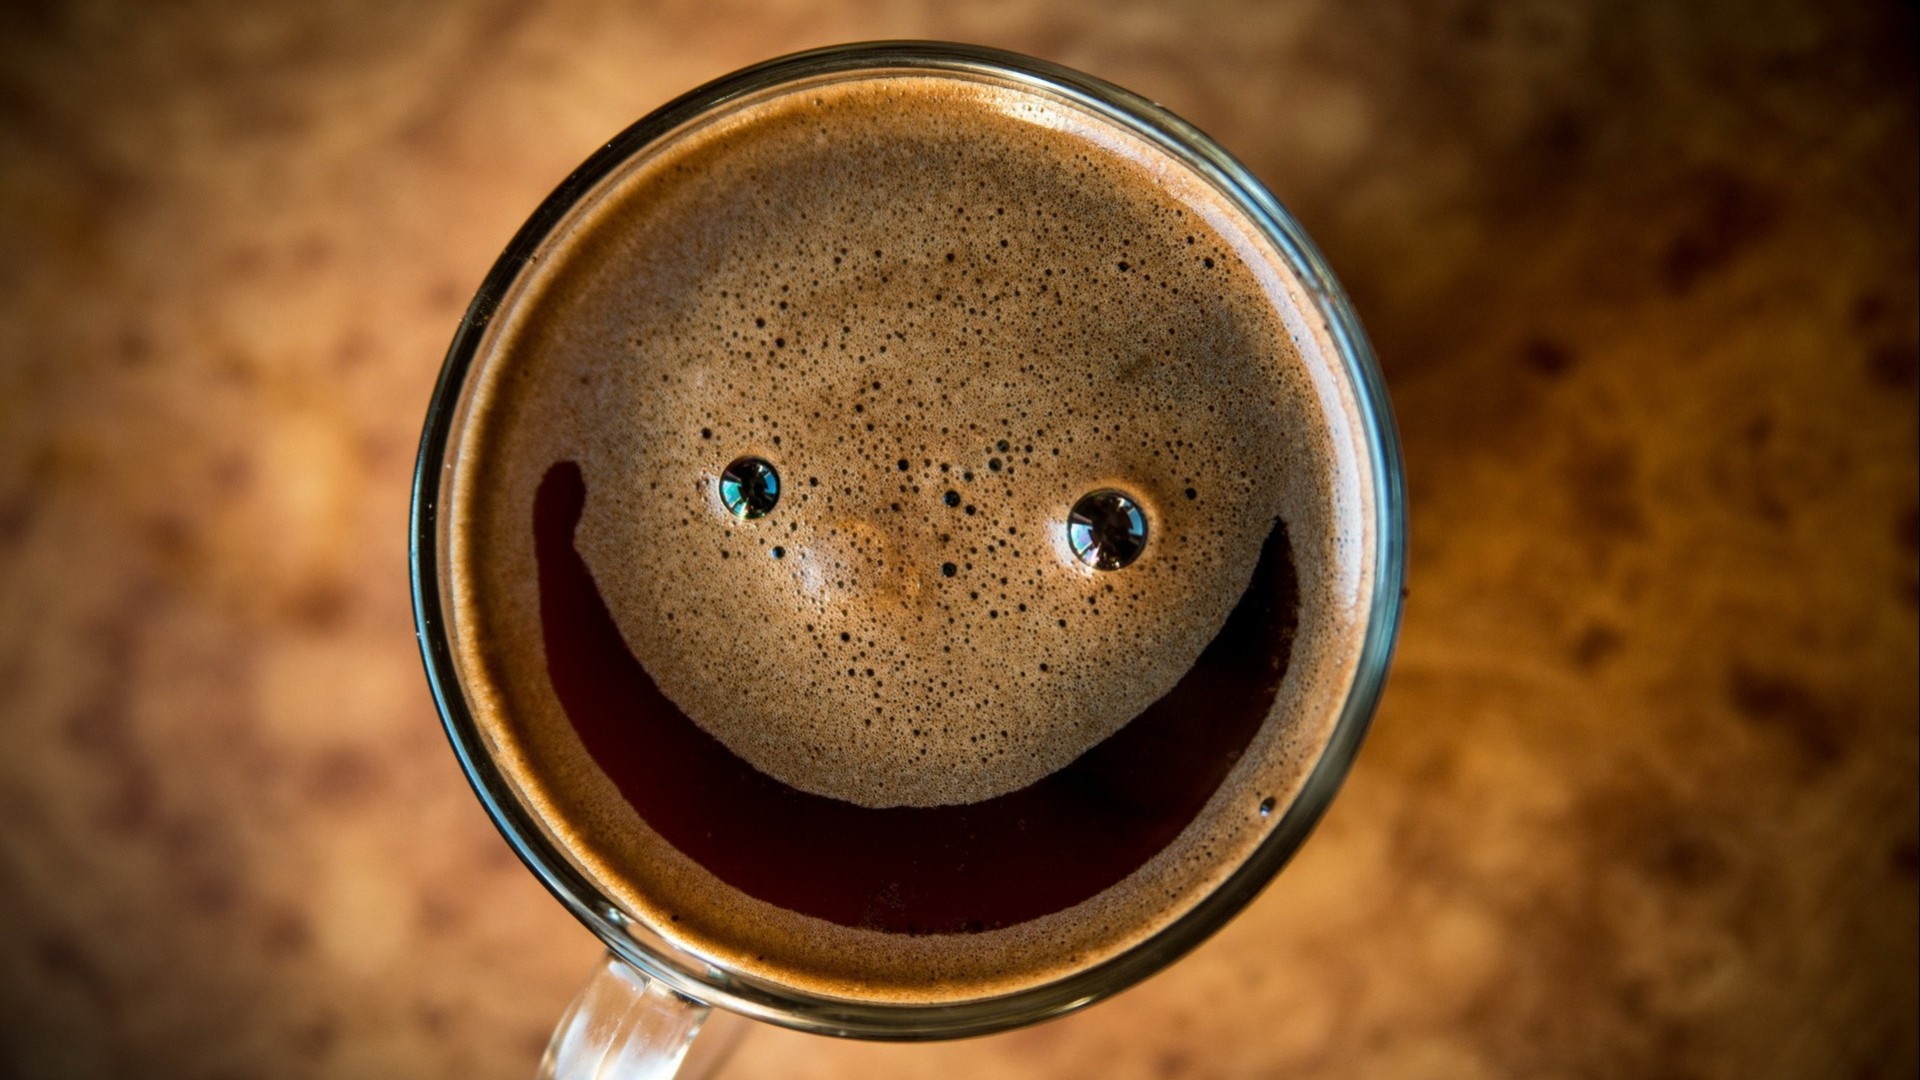 General 1920x1080 coffee top view smiling humor brown cup closeup